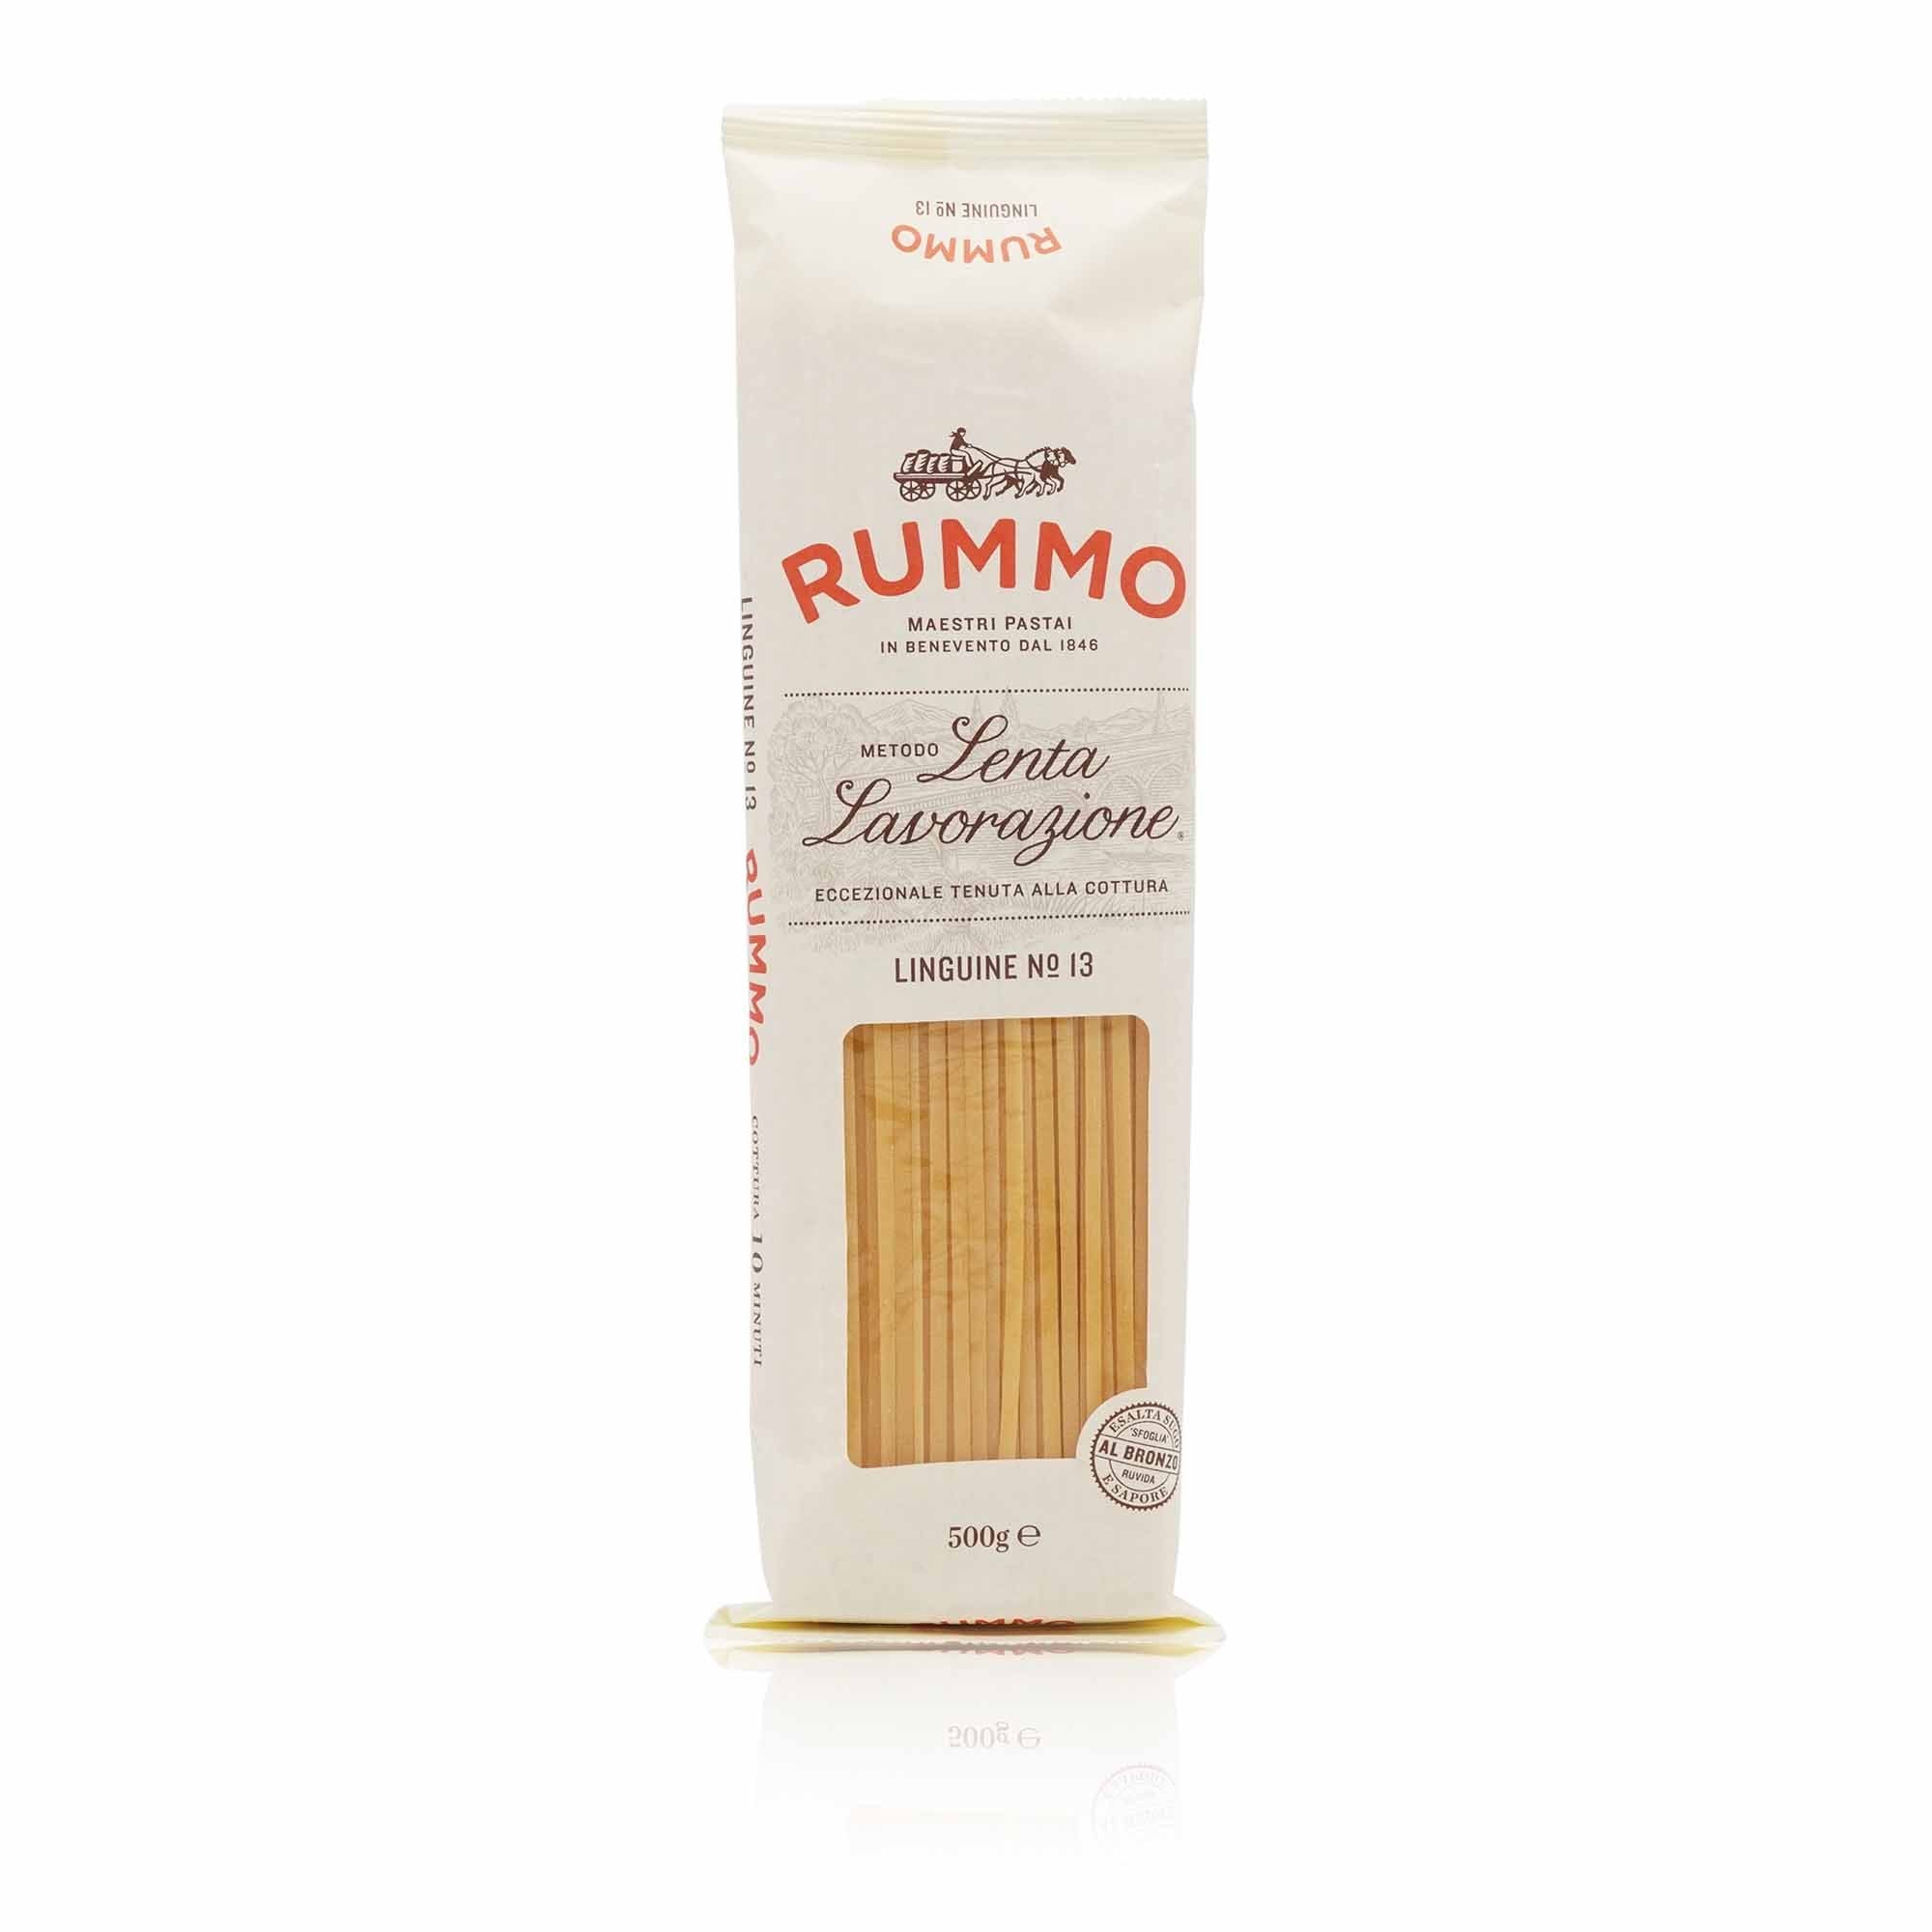 RUMMO Linguine N° 13 – Linguine Nr.13 - 0,5kg